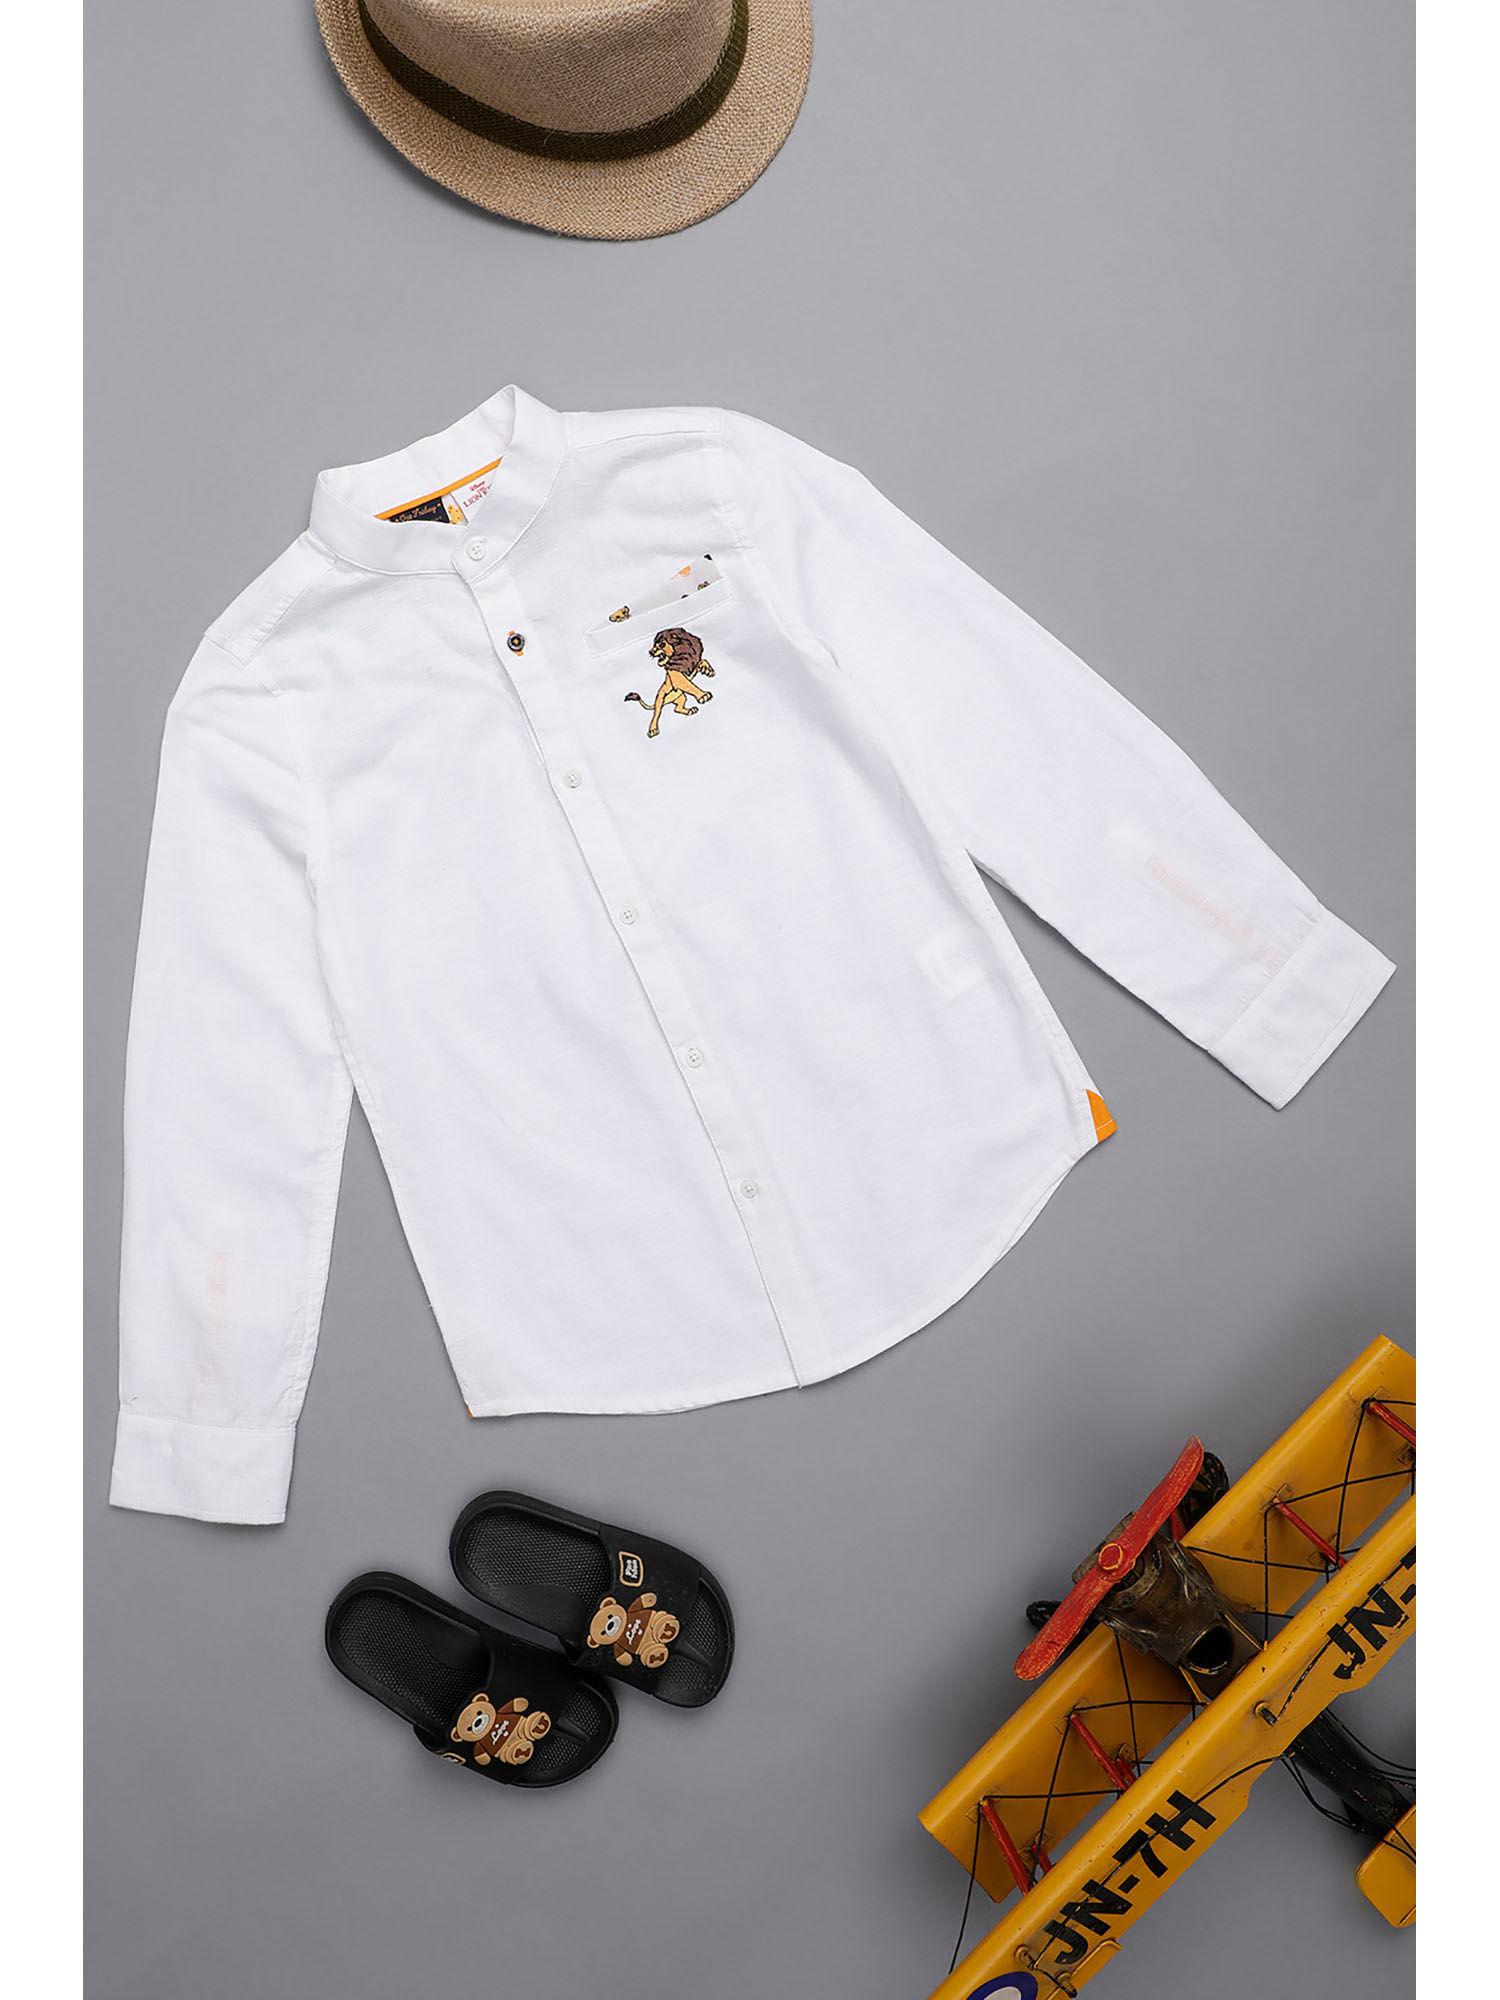 Boys White Cotton Chinese Collared Shirt